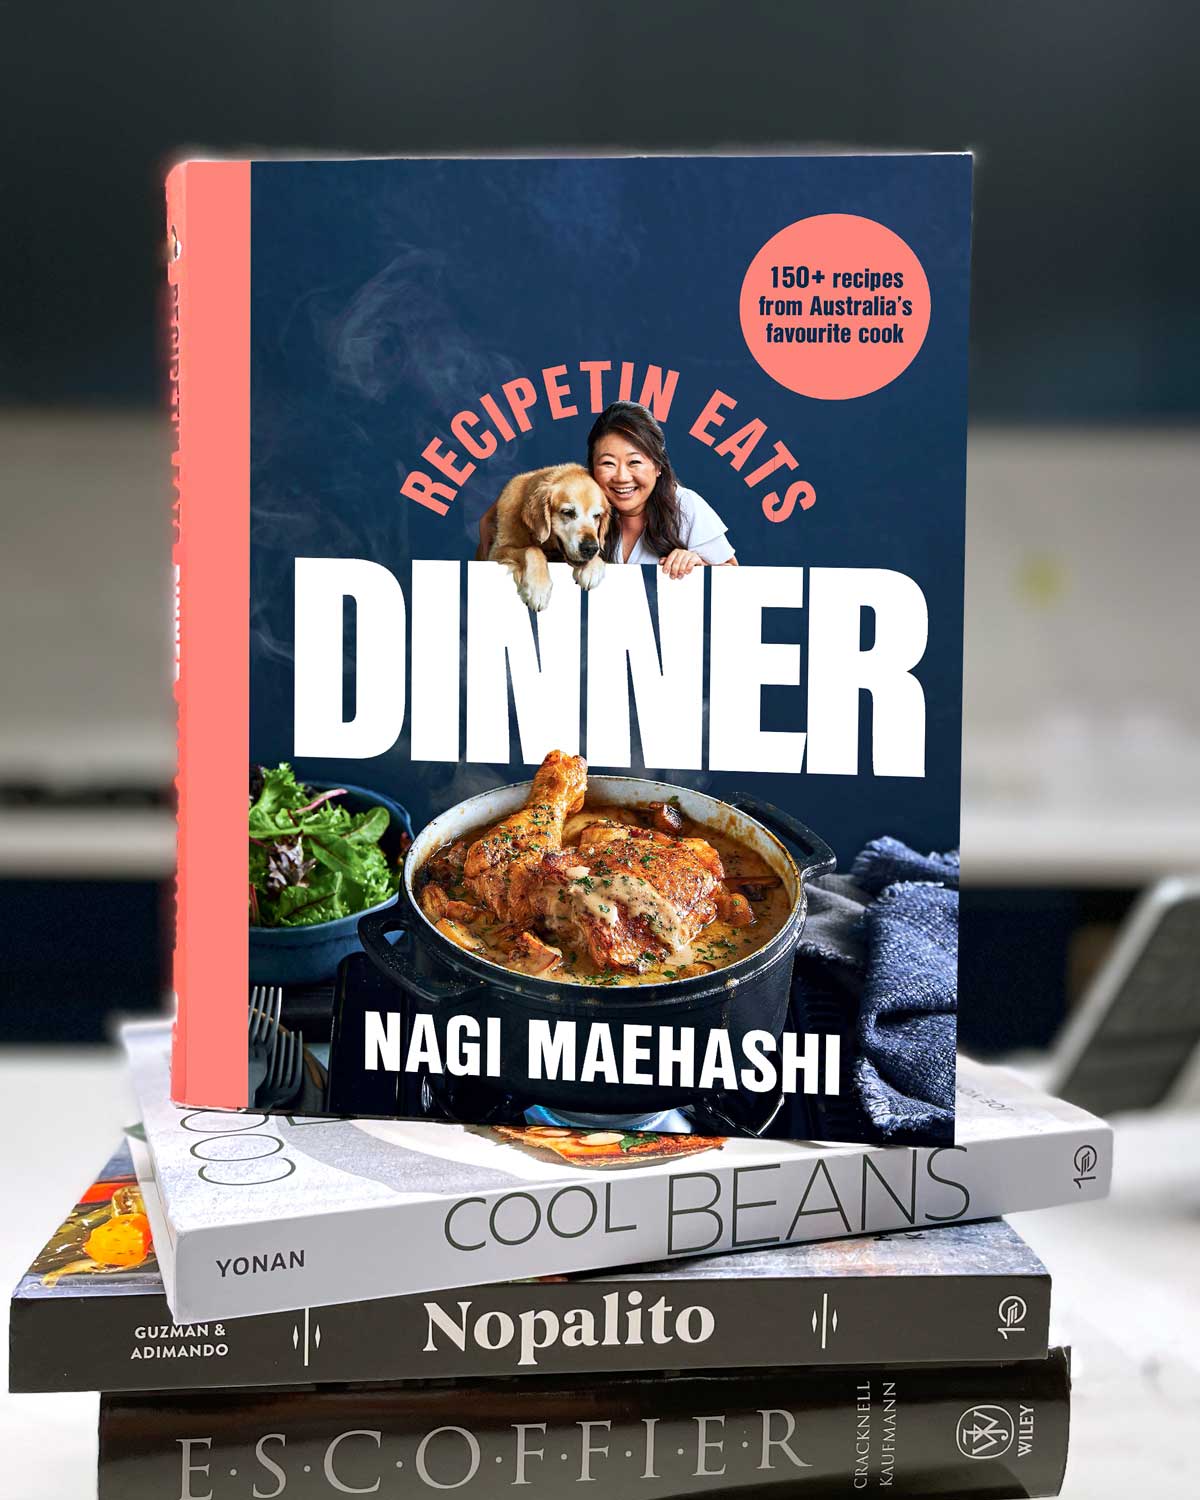 Nagi Maehashi - RecipeTin Eats Dinner cookbook cover